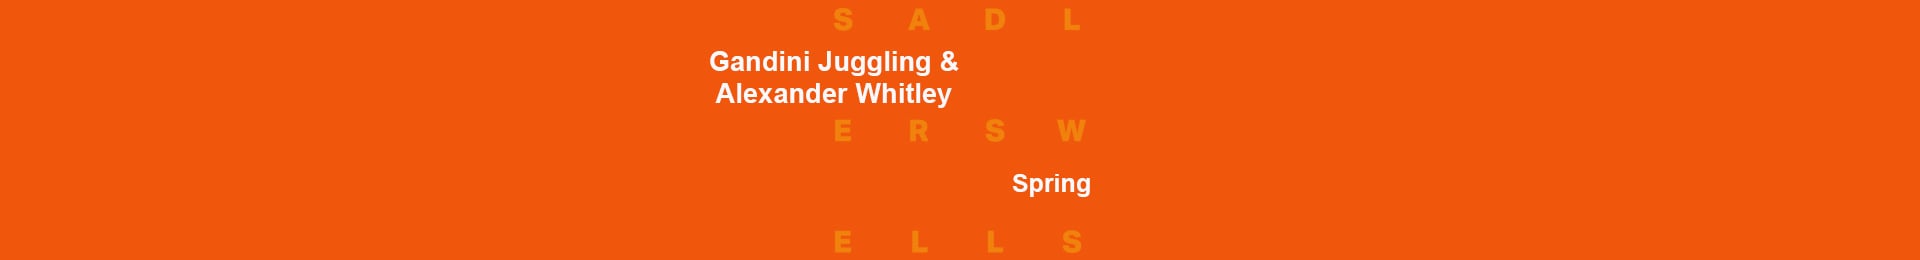 Gandini Juggling & Alexander Whitley: Spring banner image